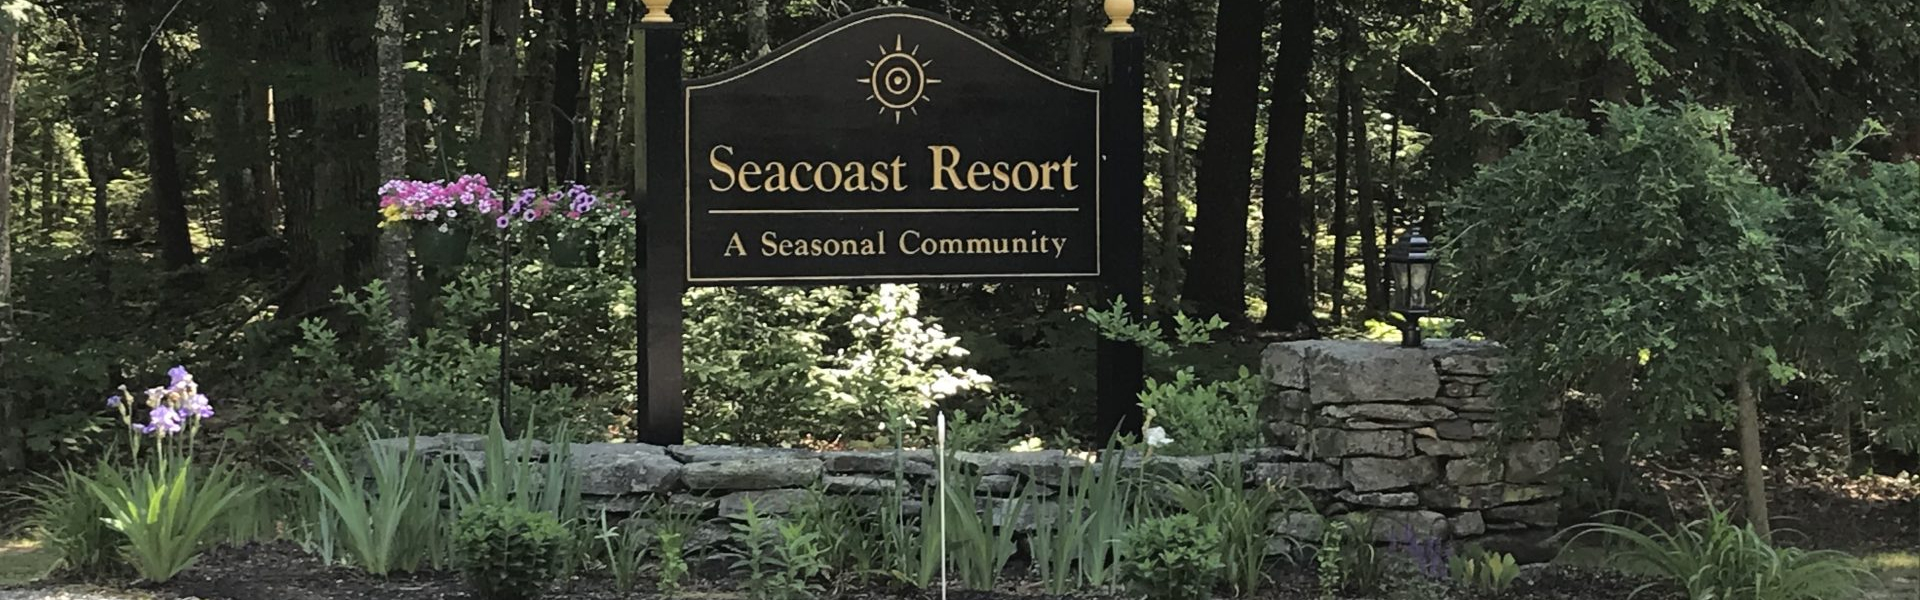 SeacoastRV-Park Sign 2 IMG_5474